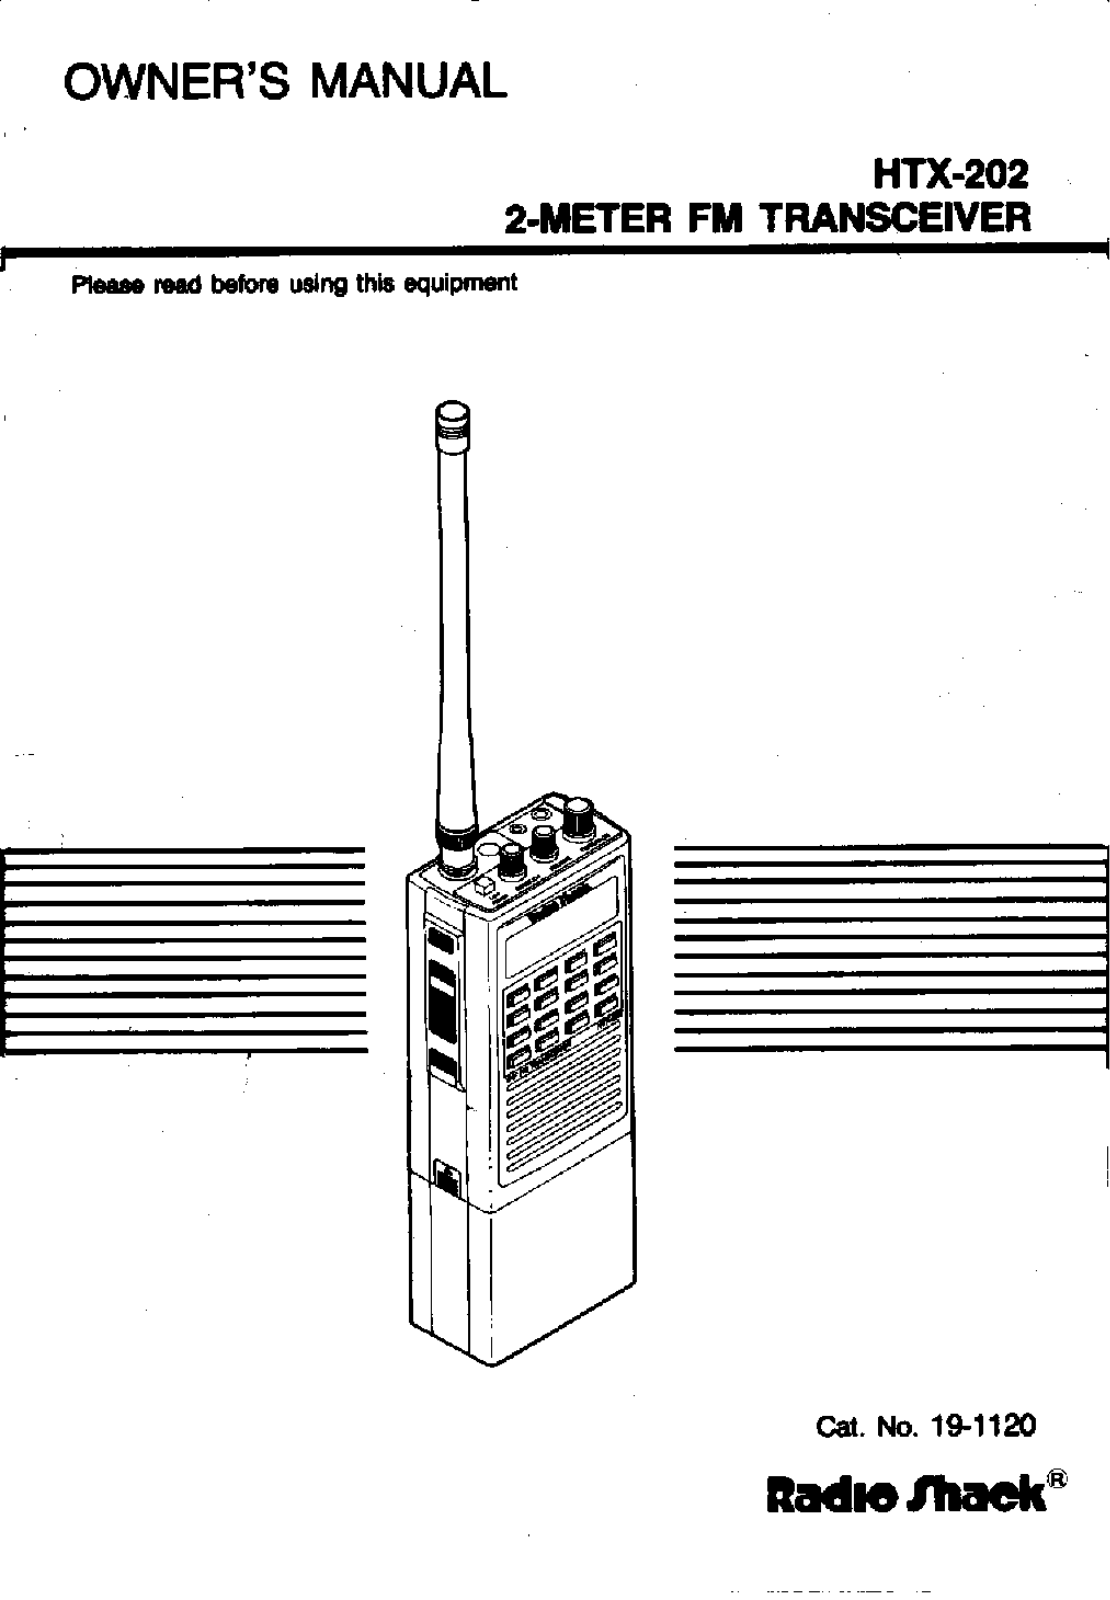 RadioShack HTX-202 Owners Manual